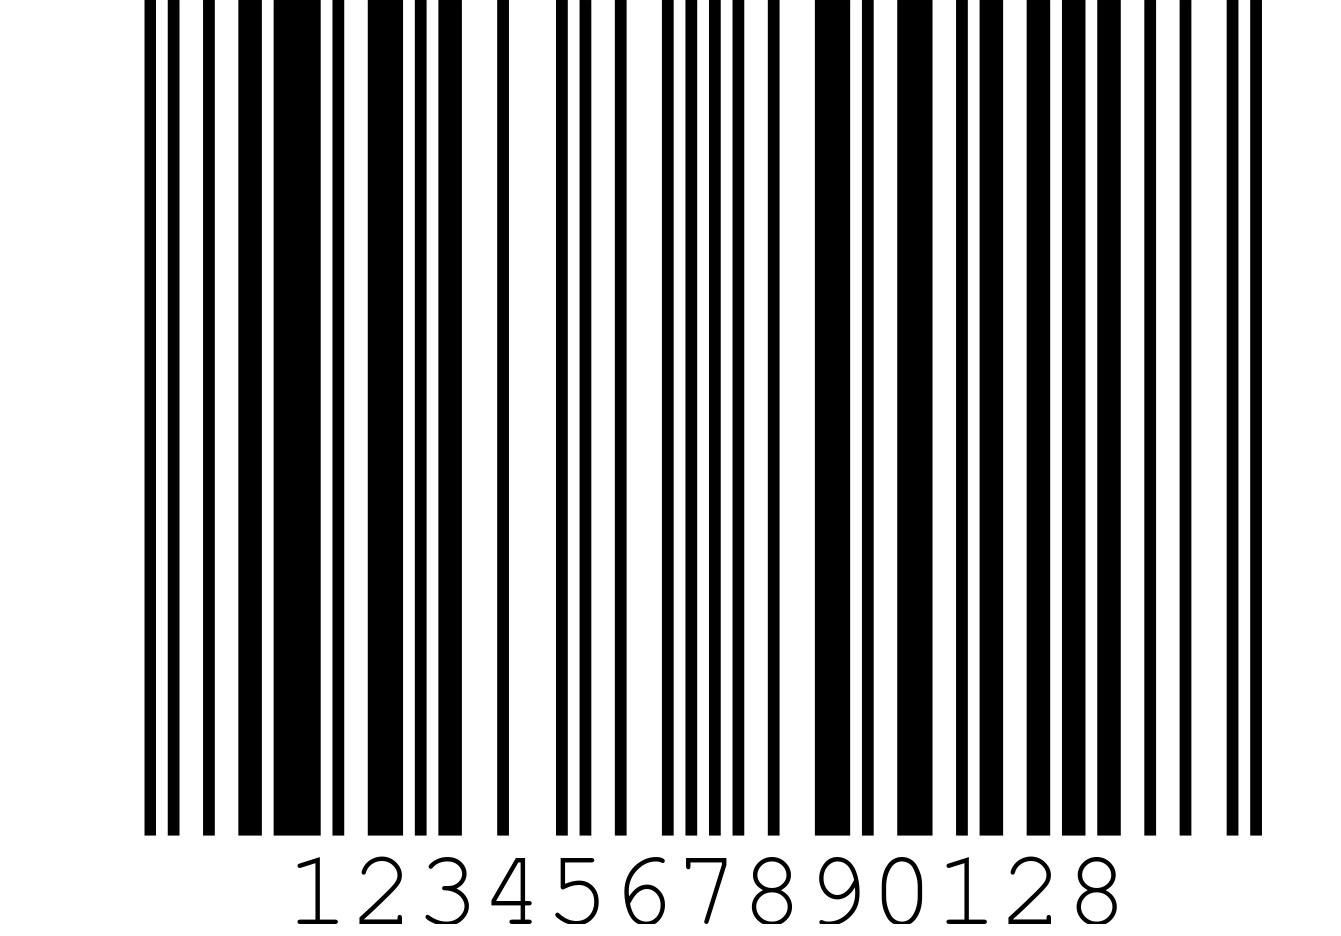 Price tag Original / Barcodes / ean-13 2